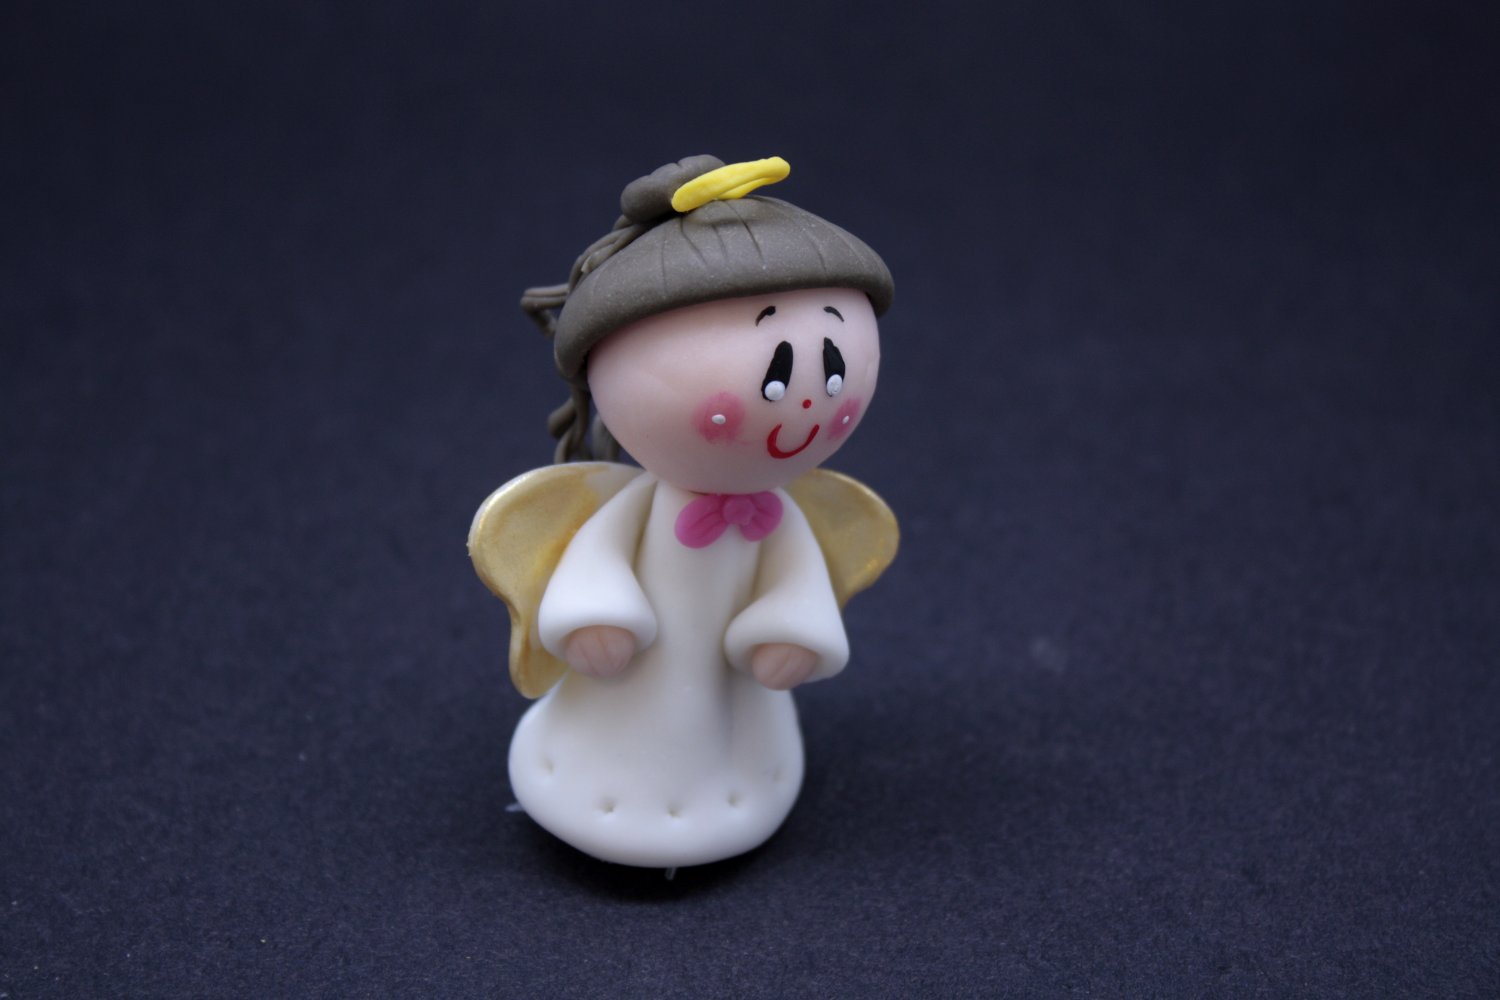 Angel Figure, Angel, Religious, Merriment, Object, HQ Photo